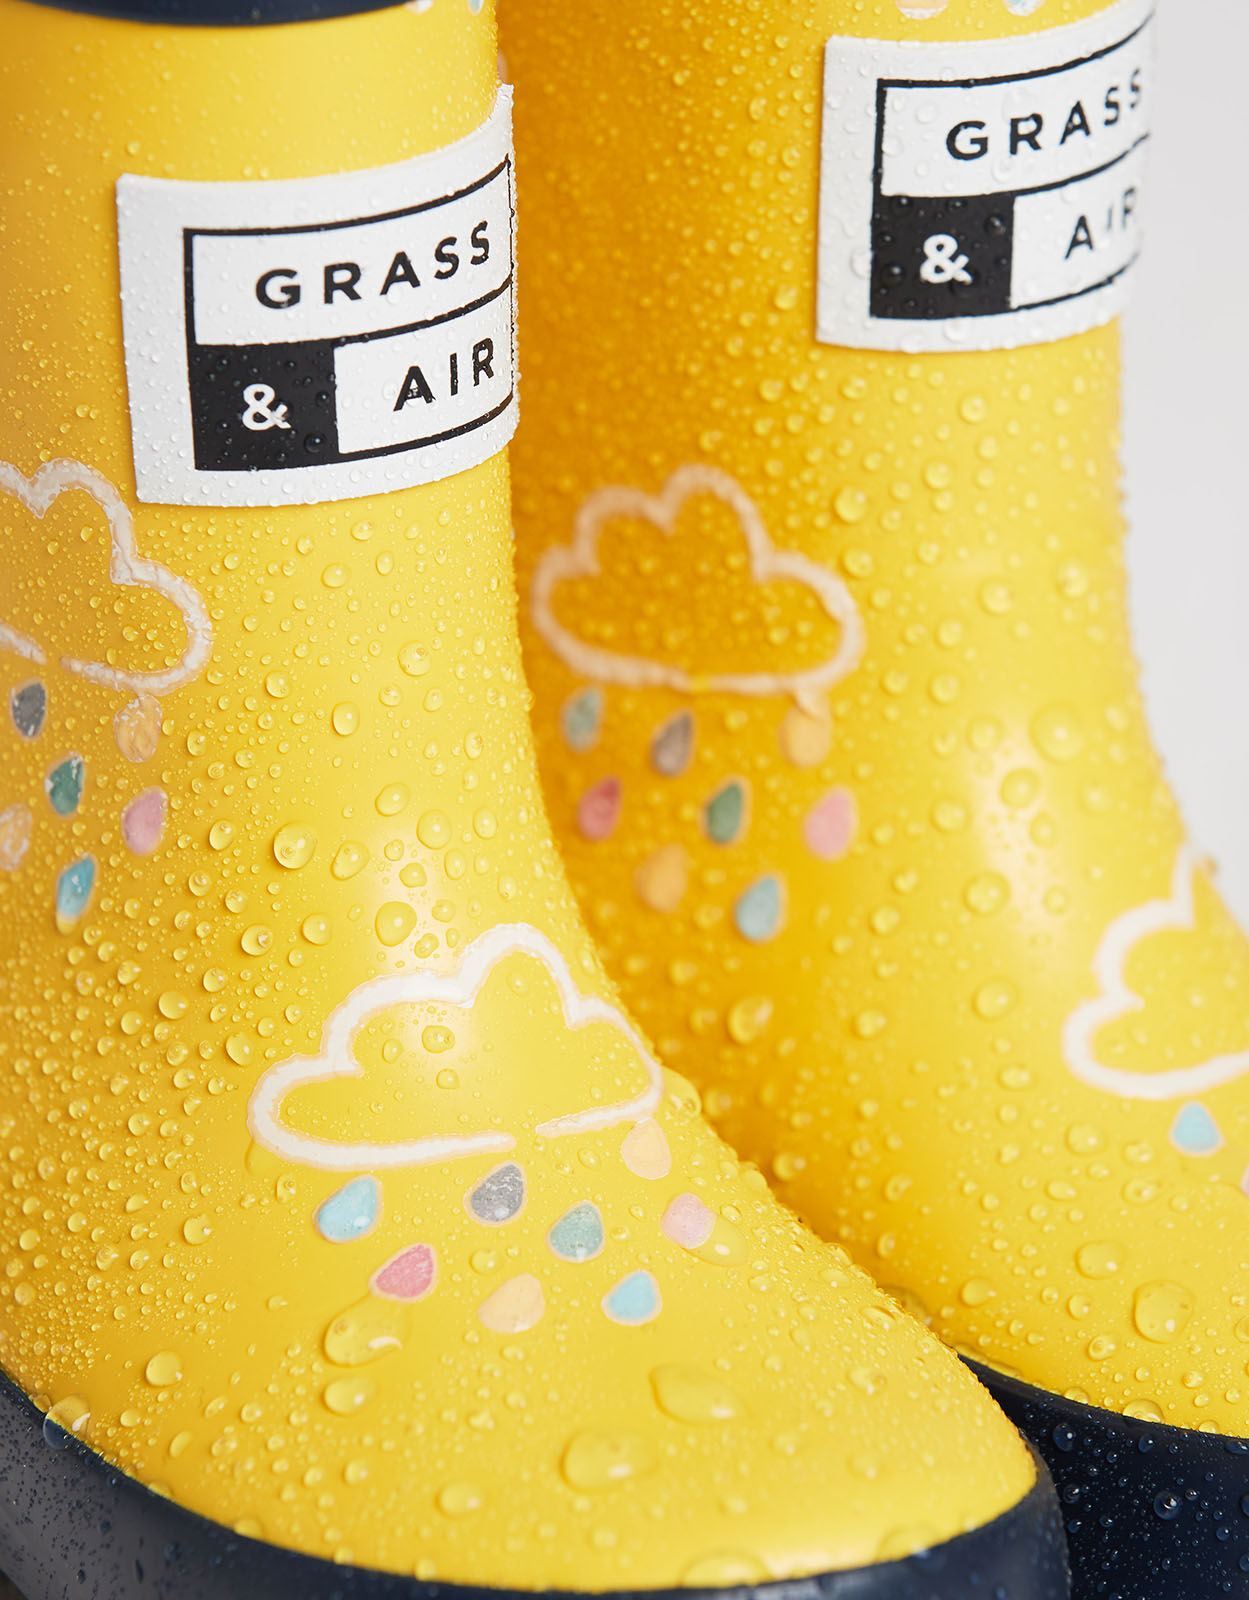 Grass & Air Colour Revealing Wellies Infant Navy Rubber Infant Wellingtons Boots